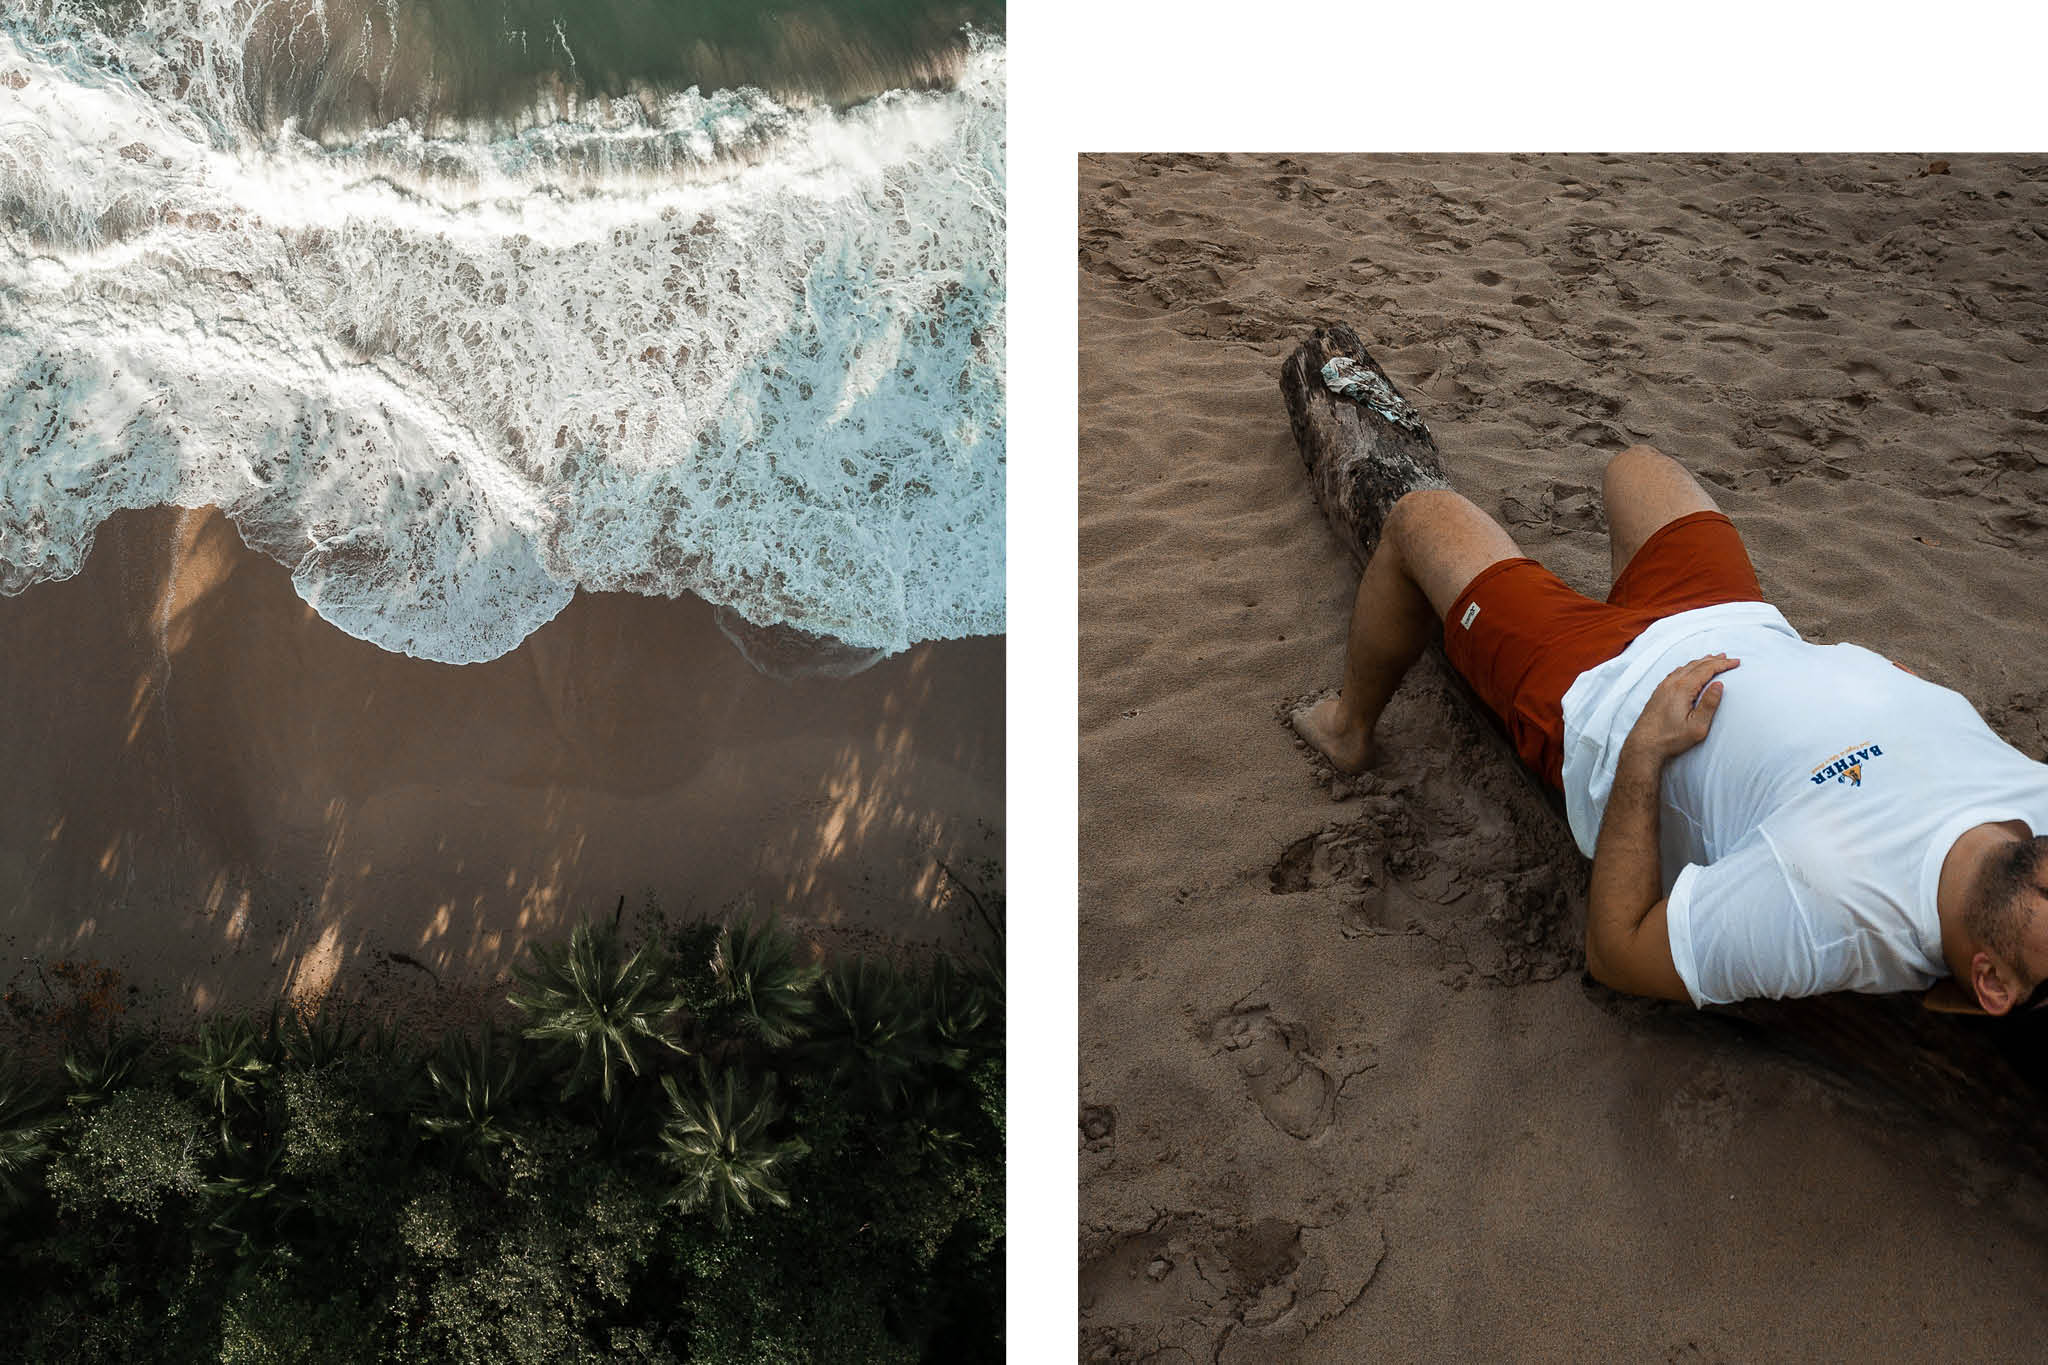 Beaches in Panama, man wearing Bather swim trunks